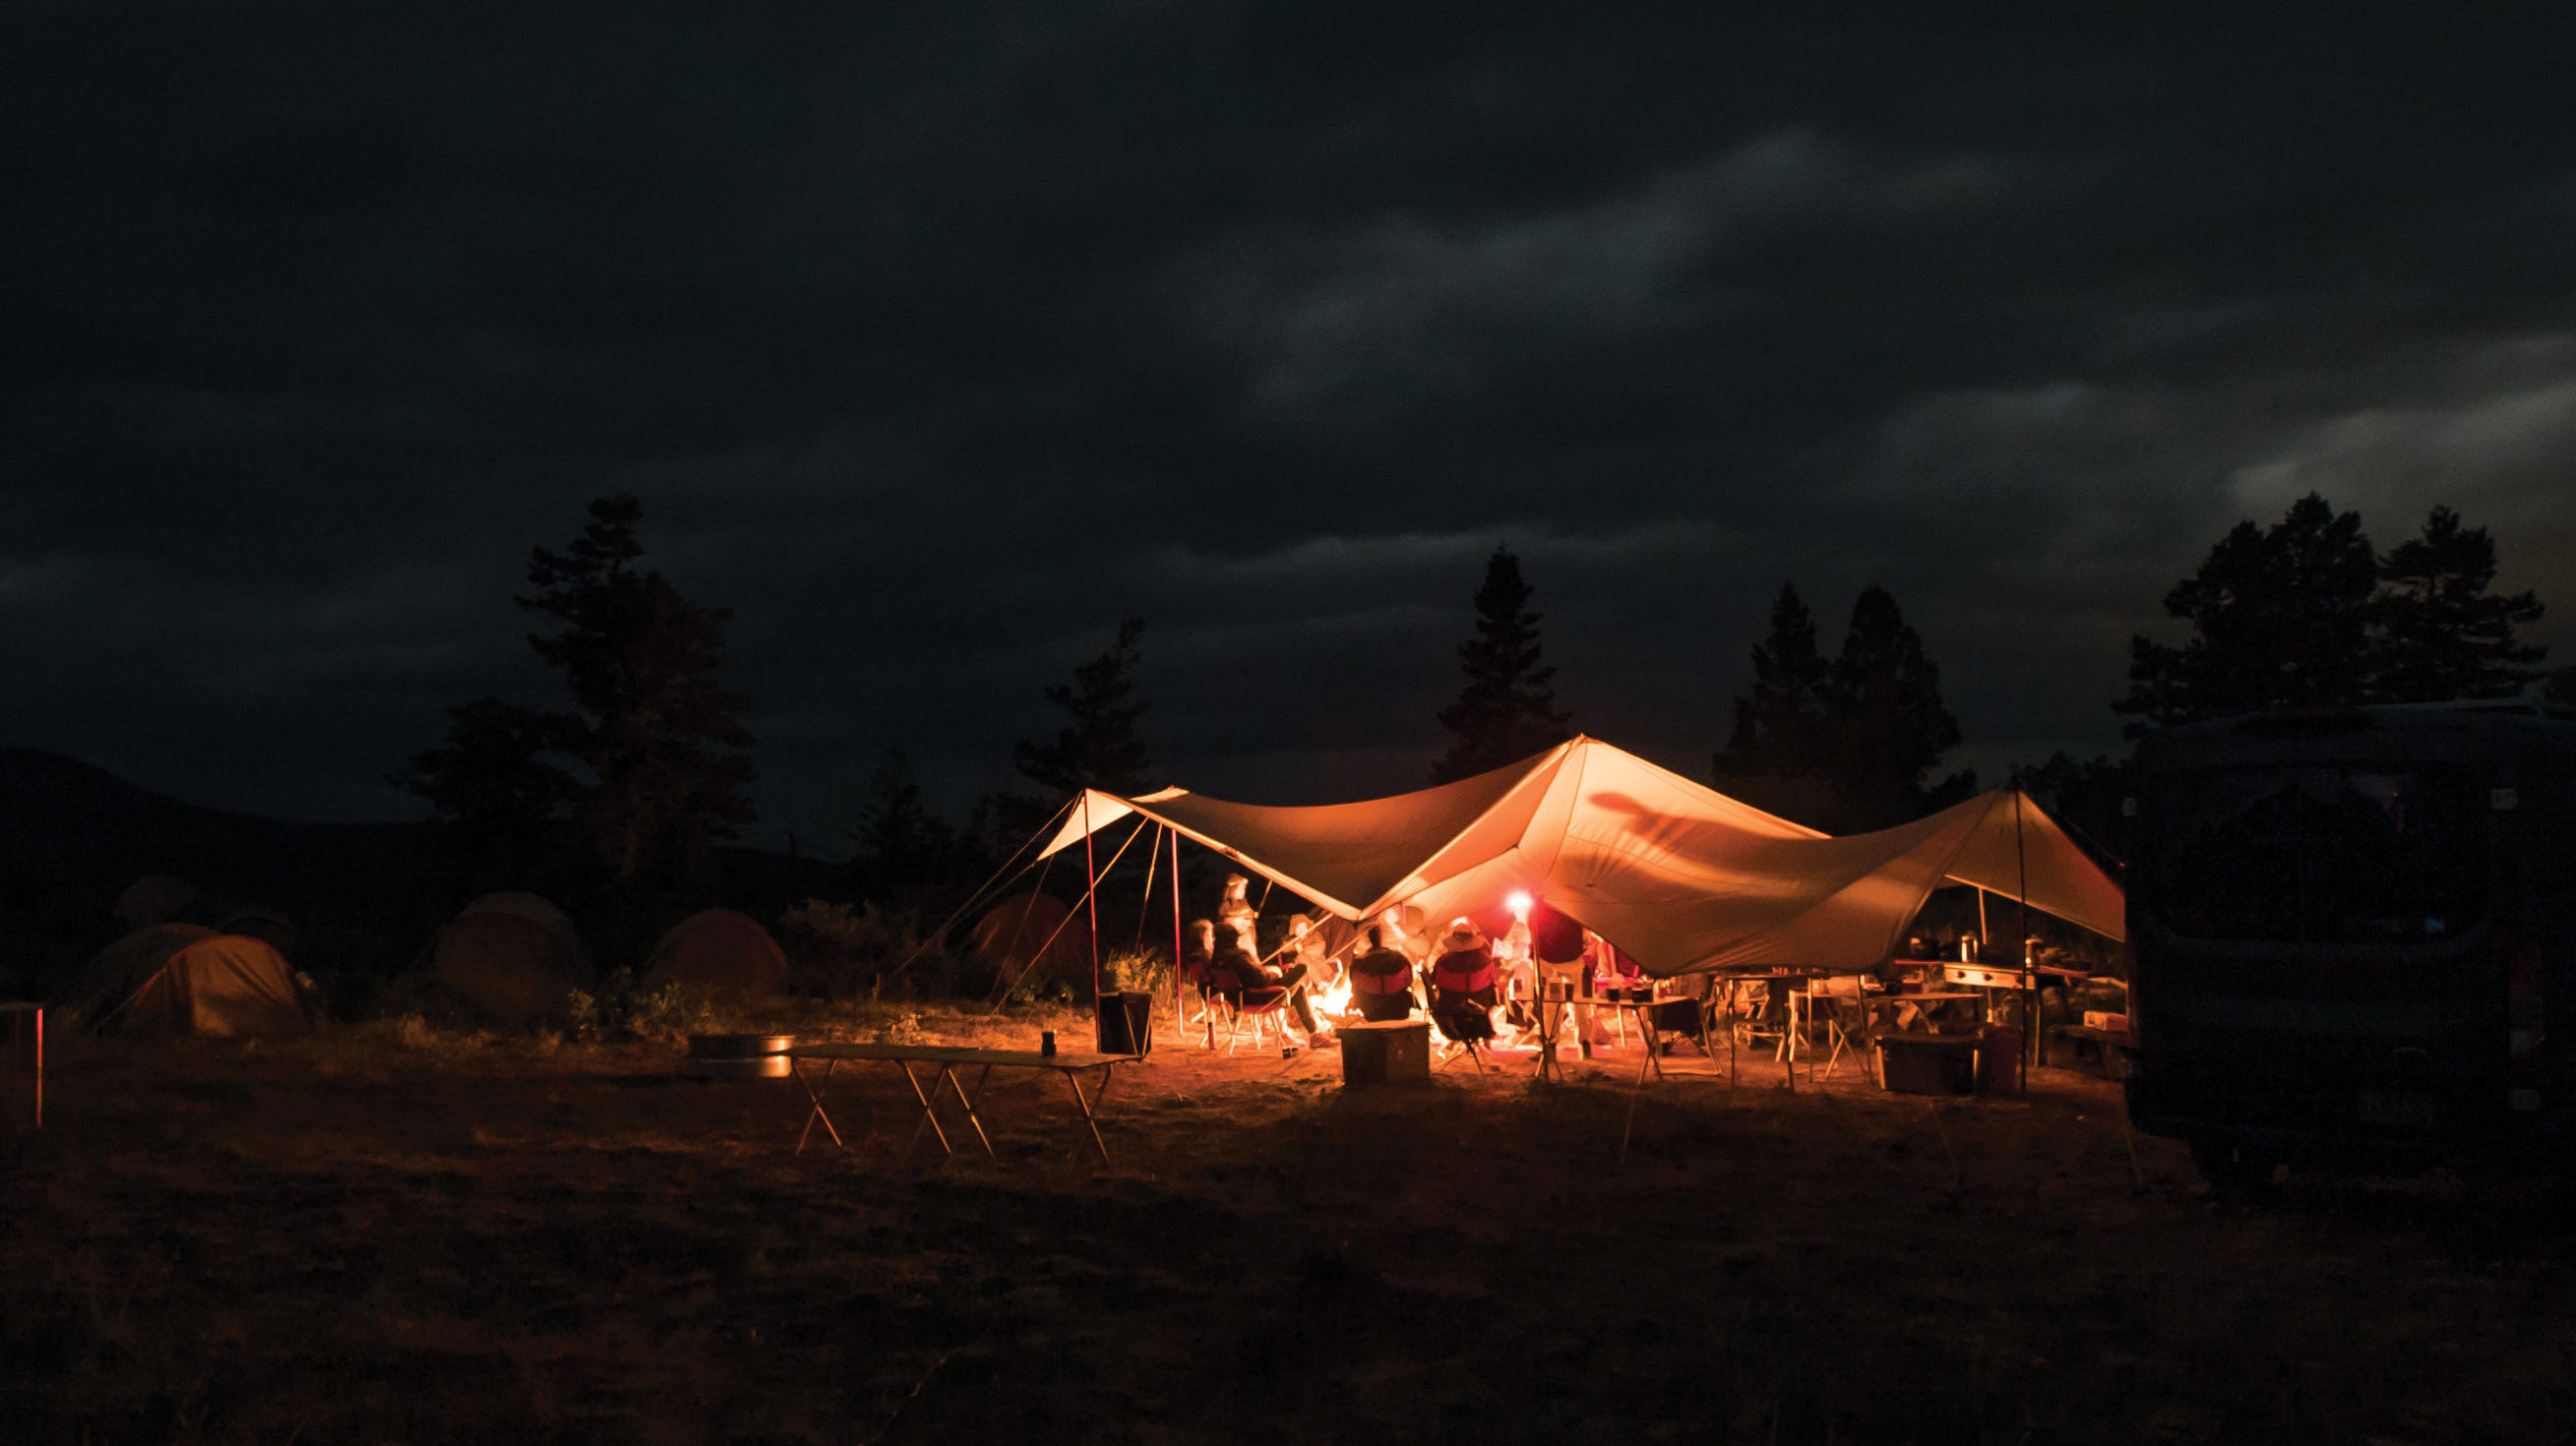 Camp tent setup at night